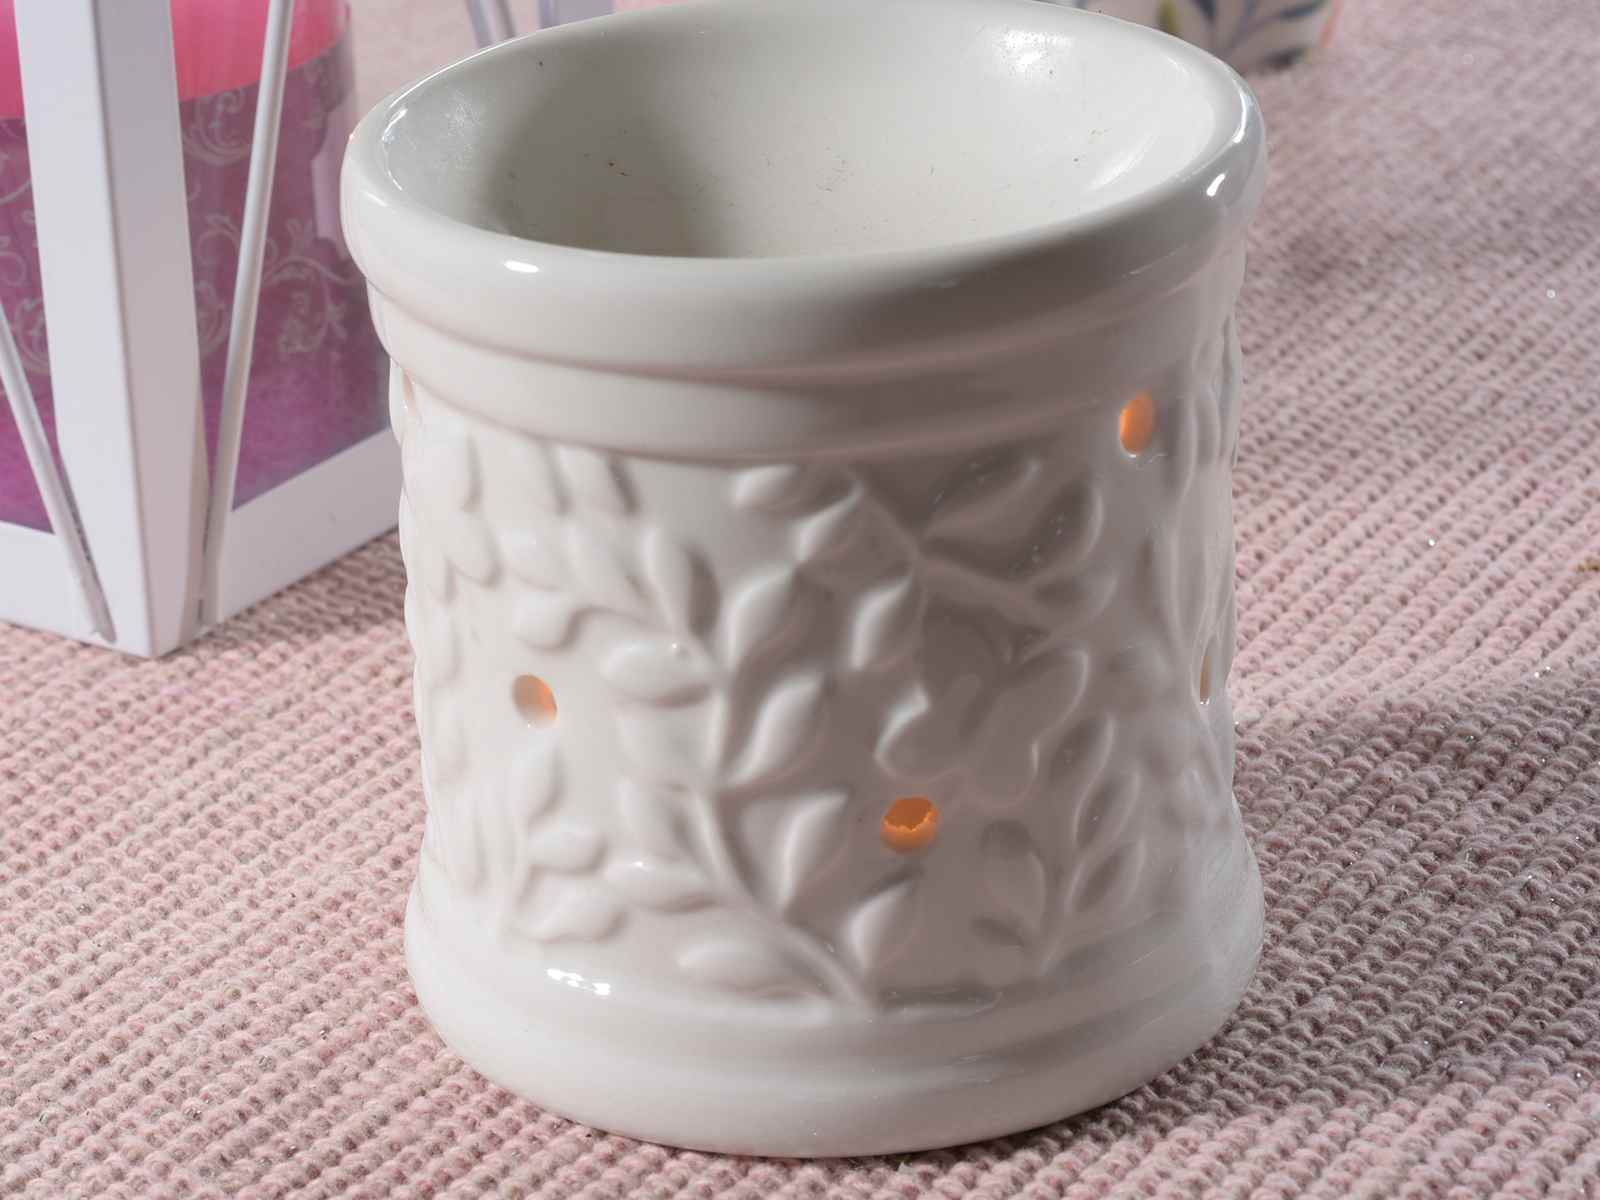 Brucia essenze in ceramica bianca con decori in rilievo – Emotion&Travel